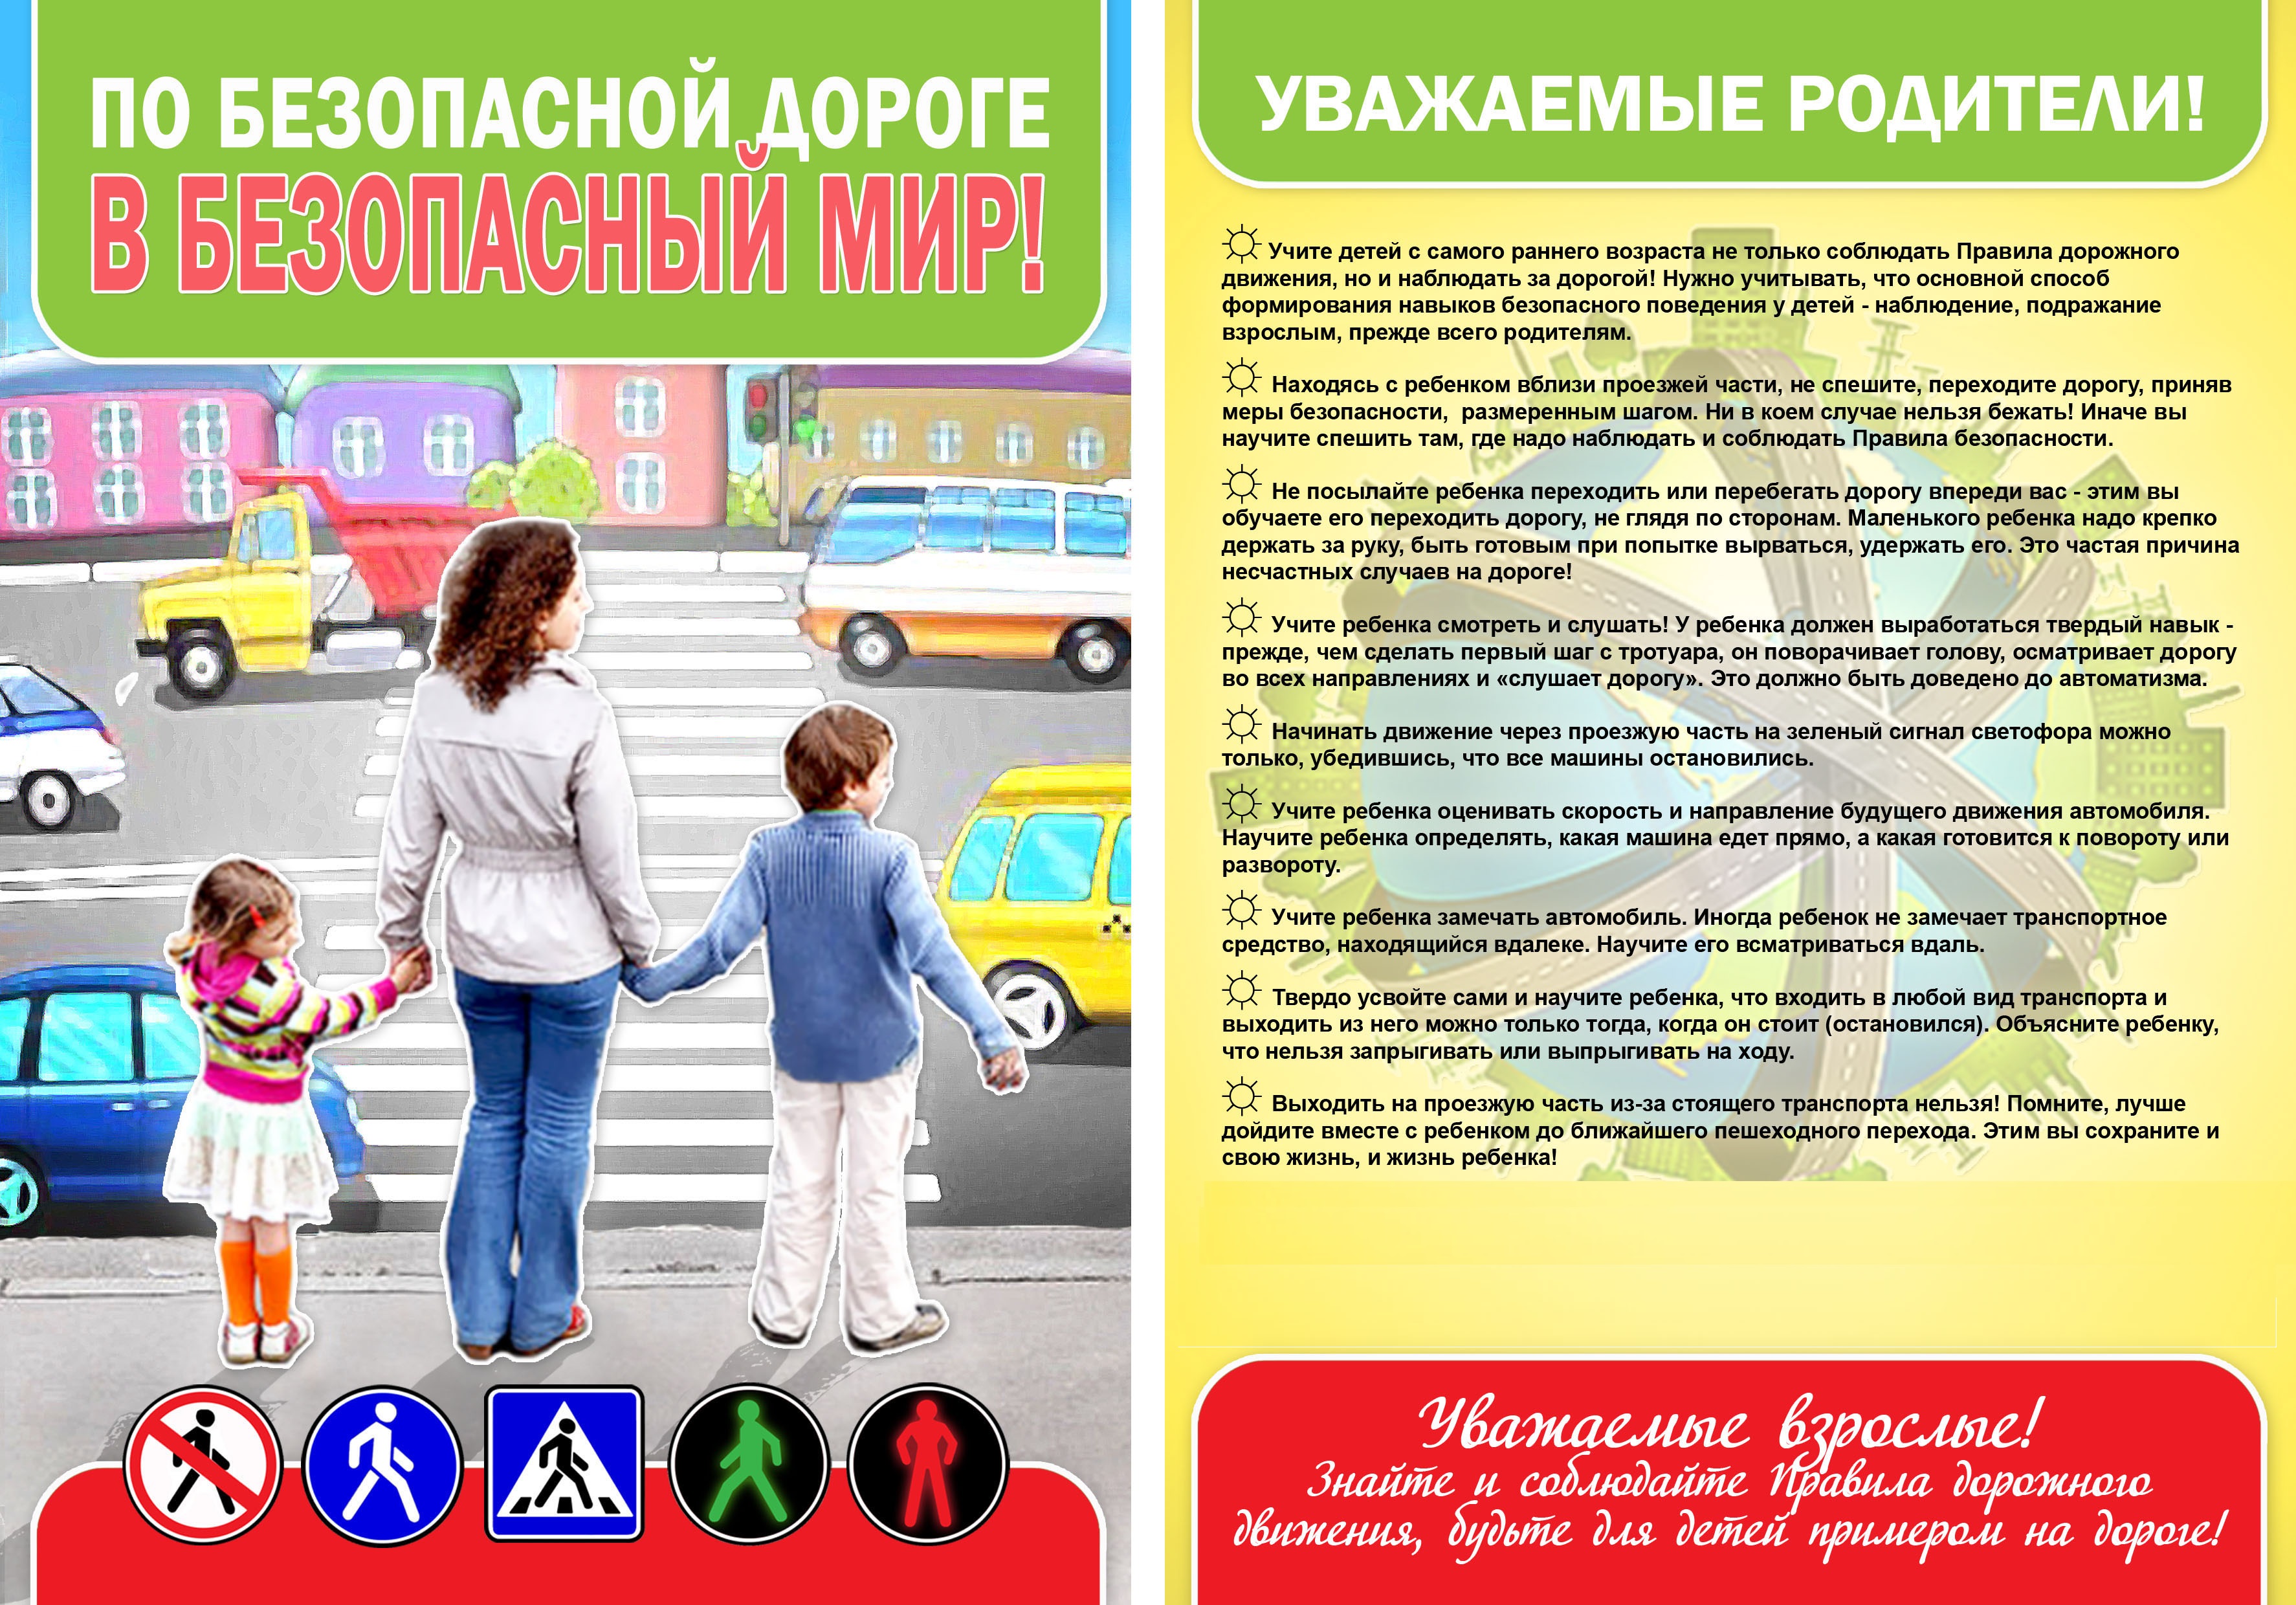 http://mbousosh36.my1.ru/bezopasnost/pamjatka_roditeljam_po_pdd.jpg